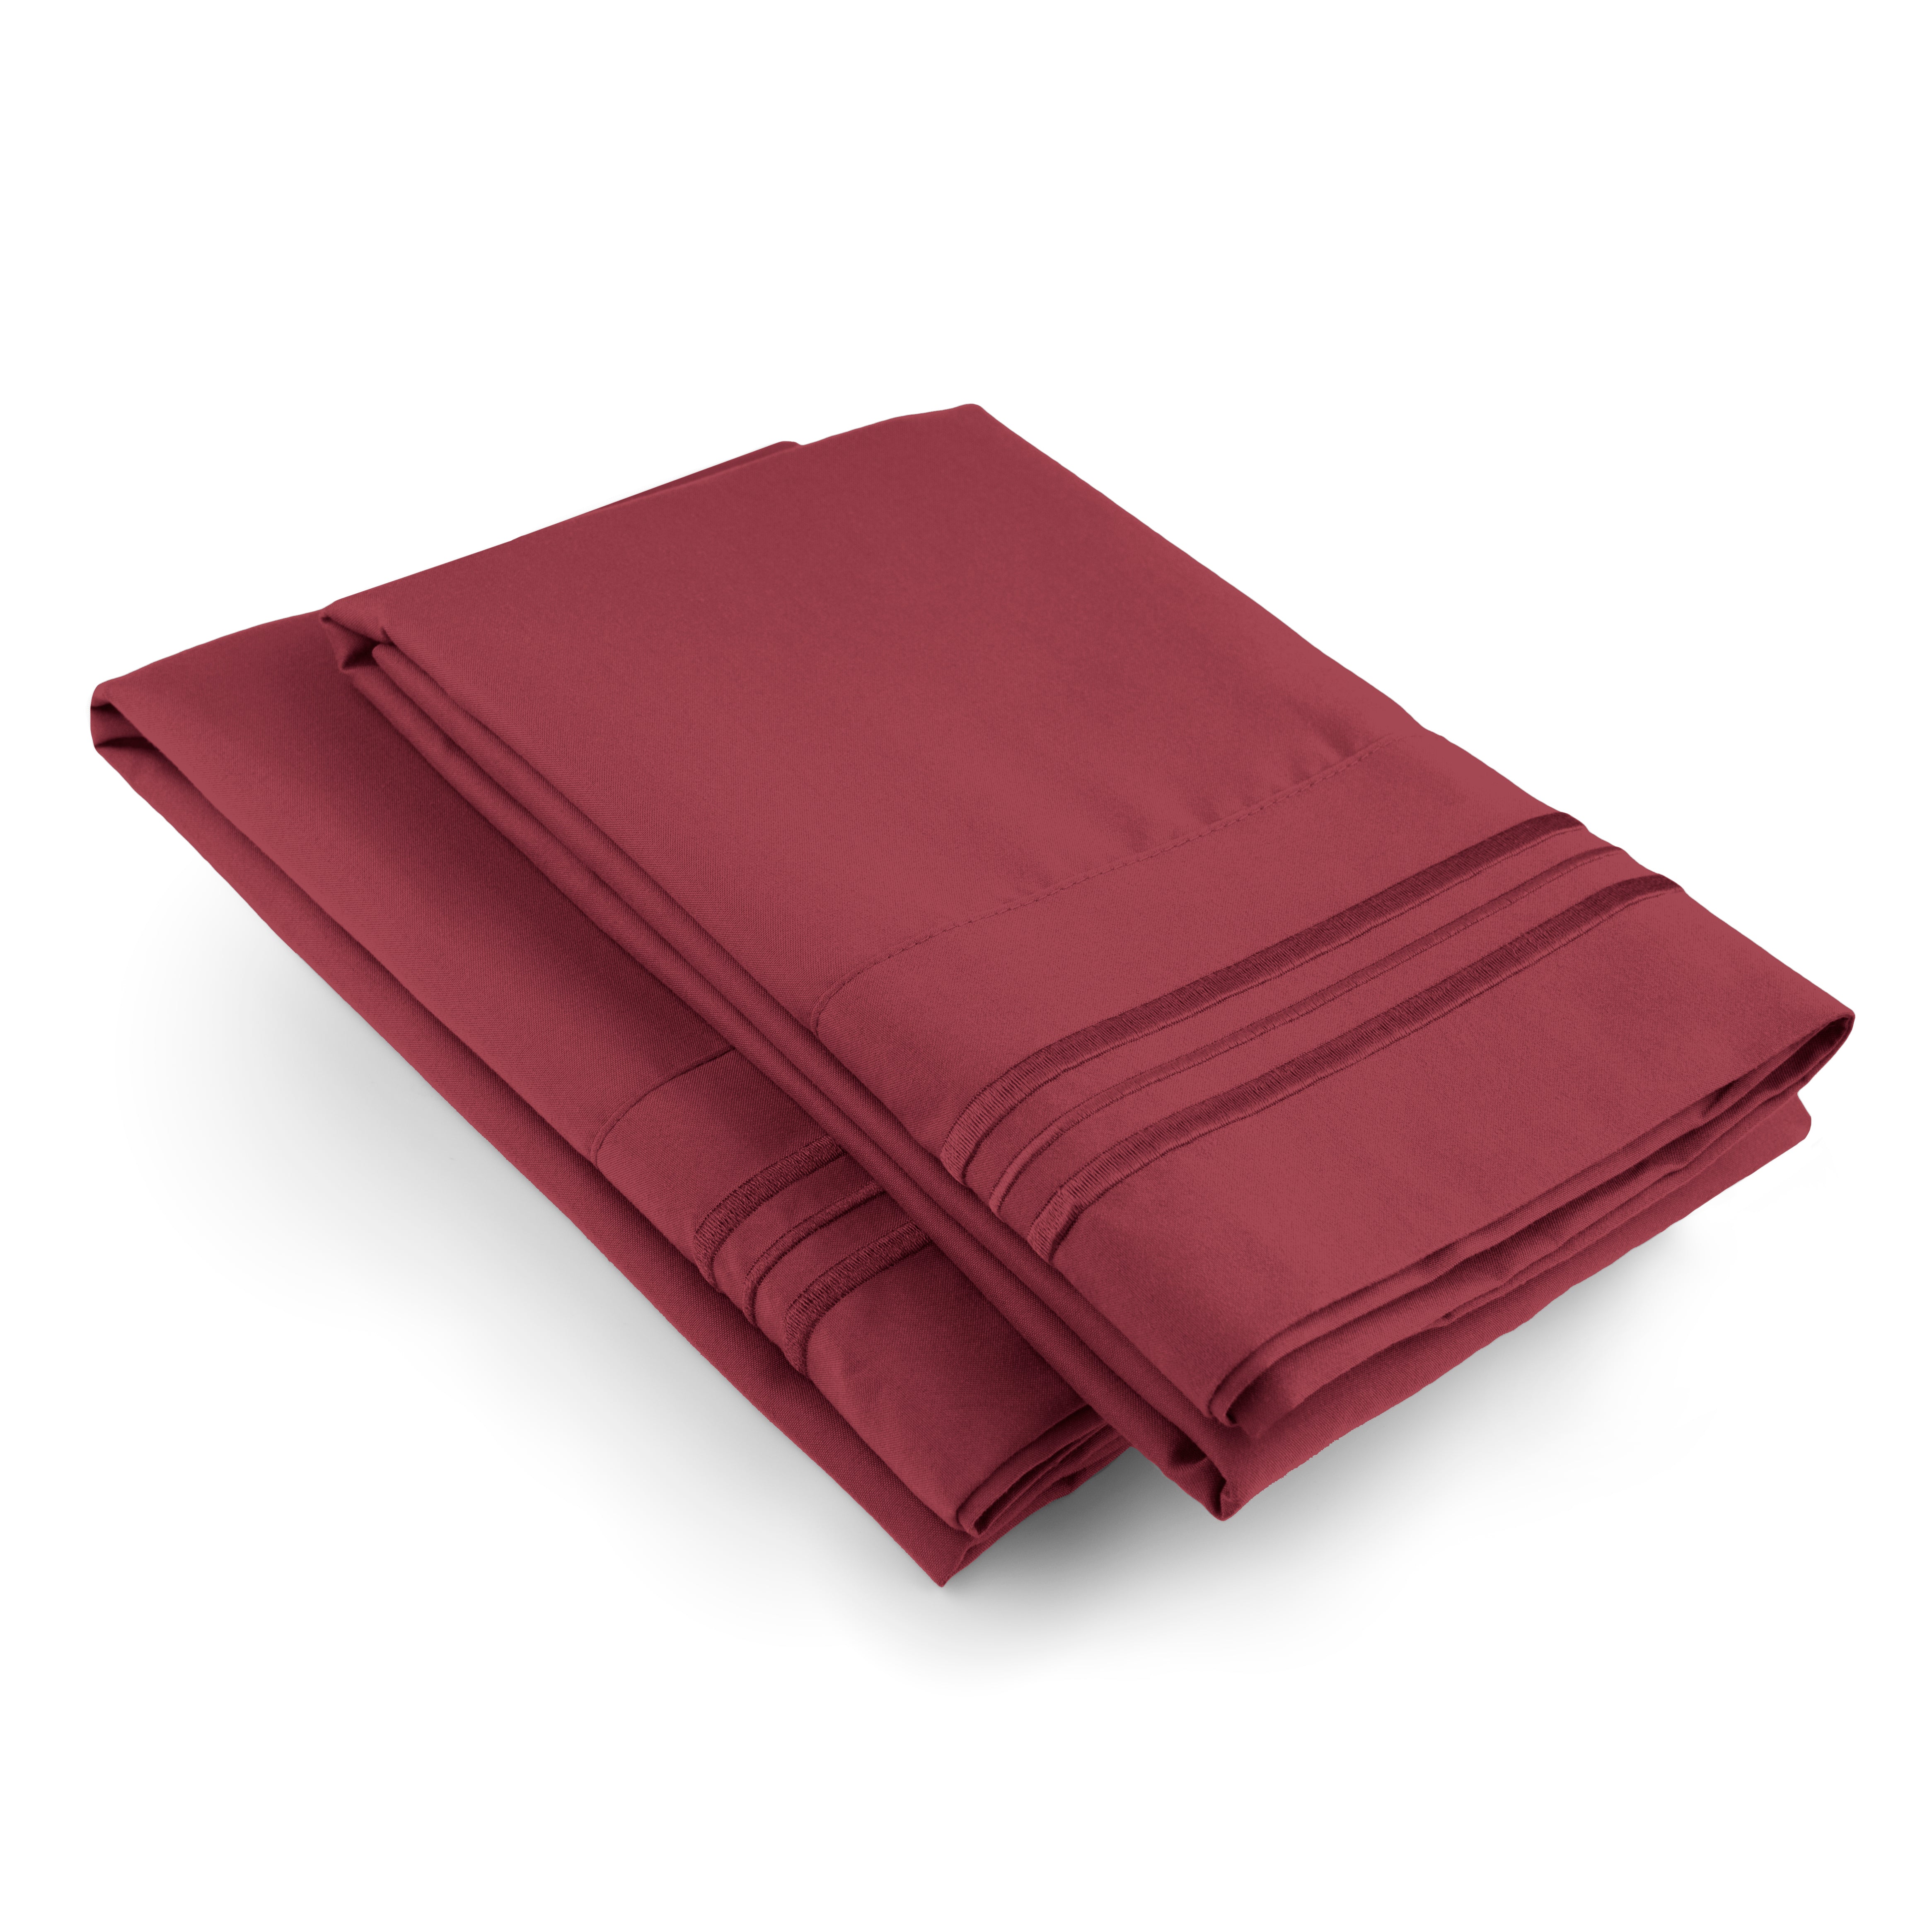 2 Pillowcase Set - Burgundy